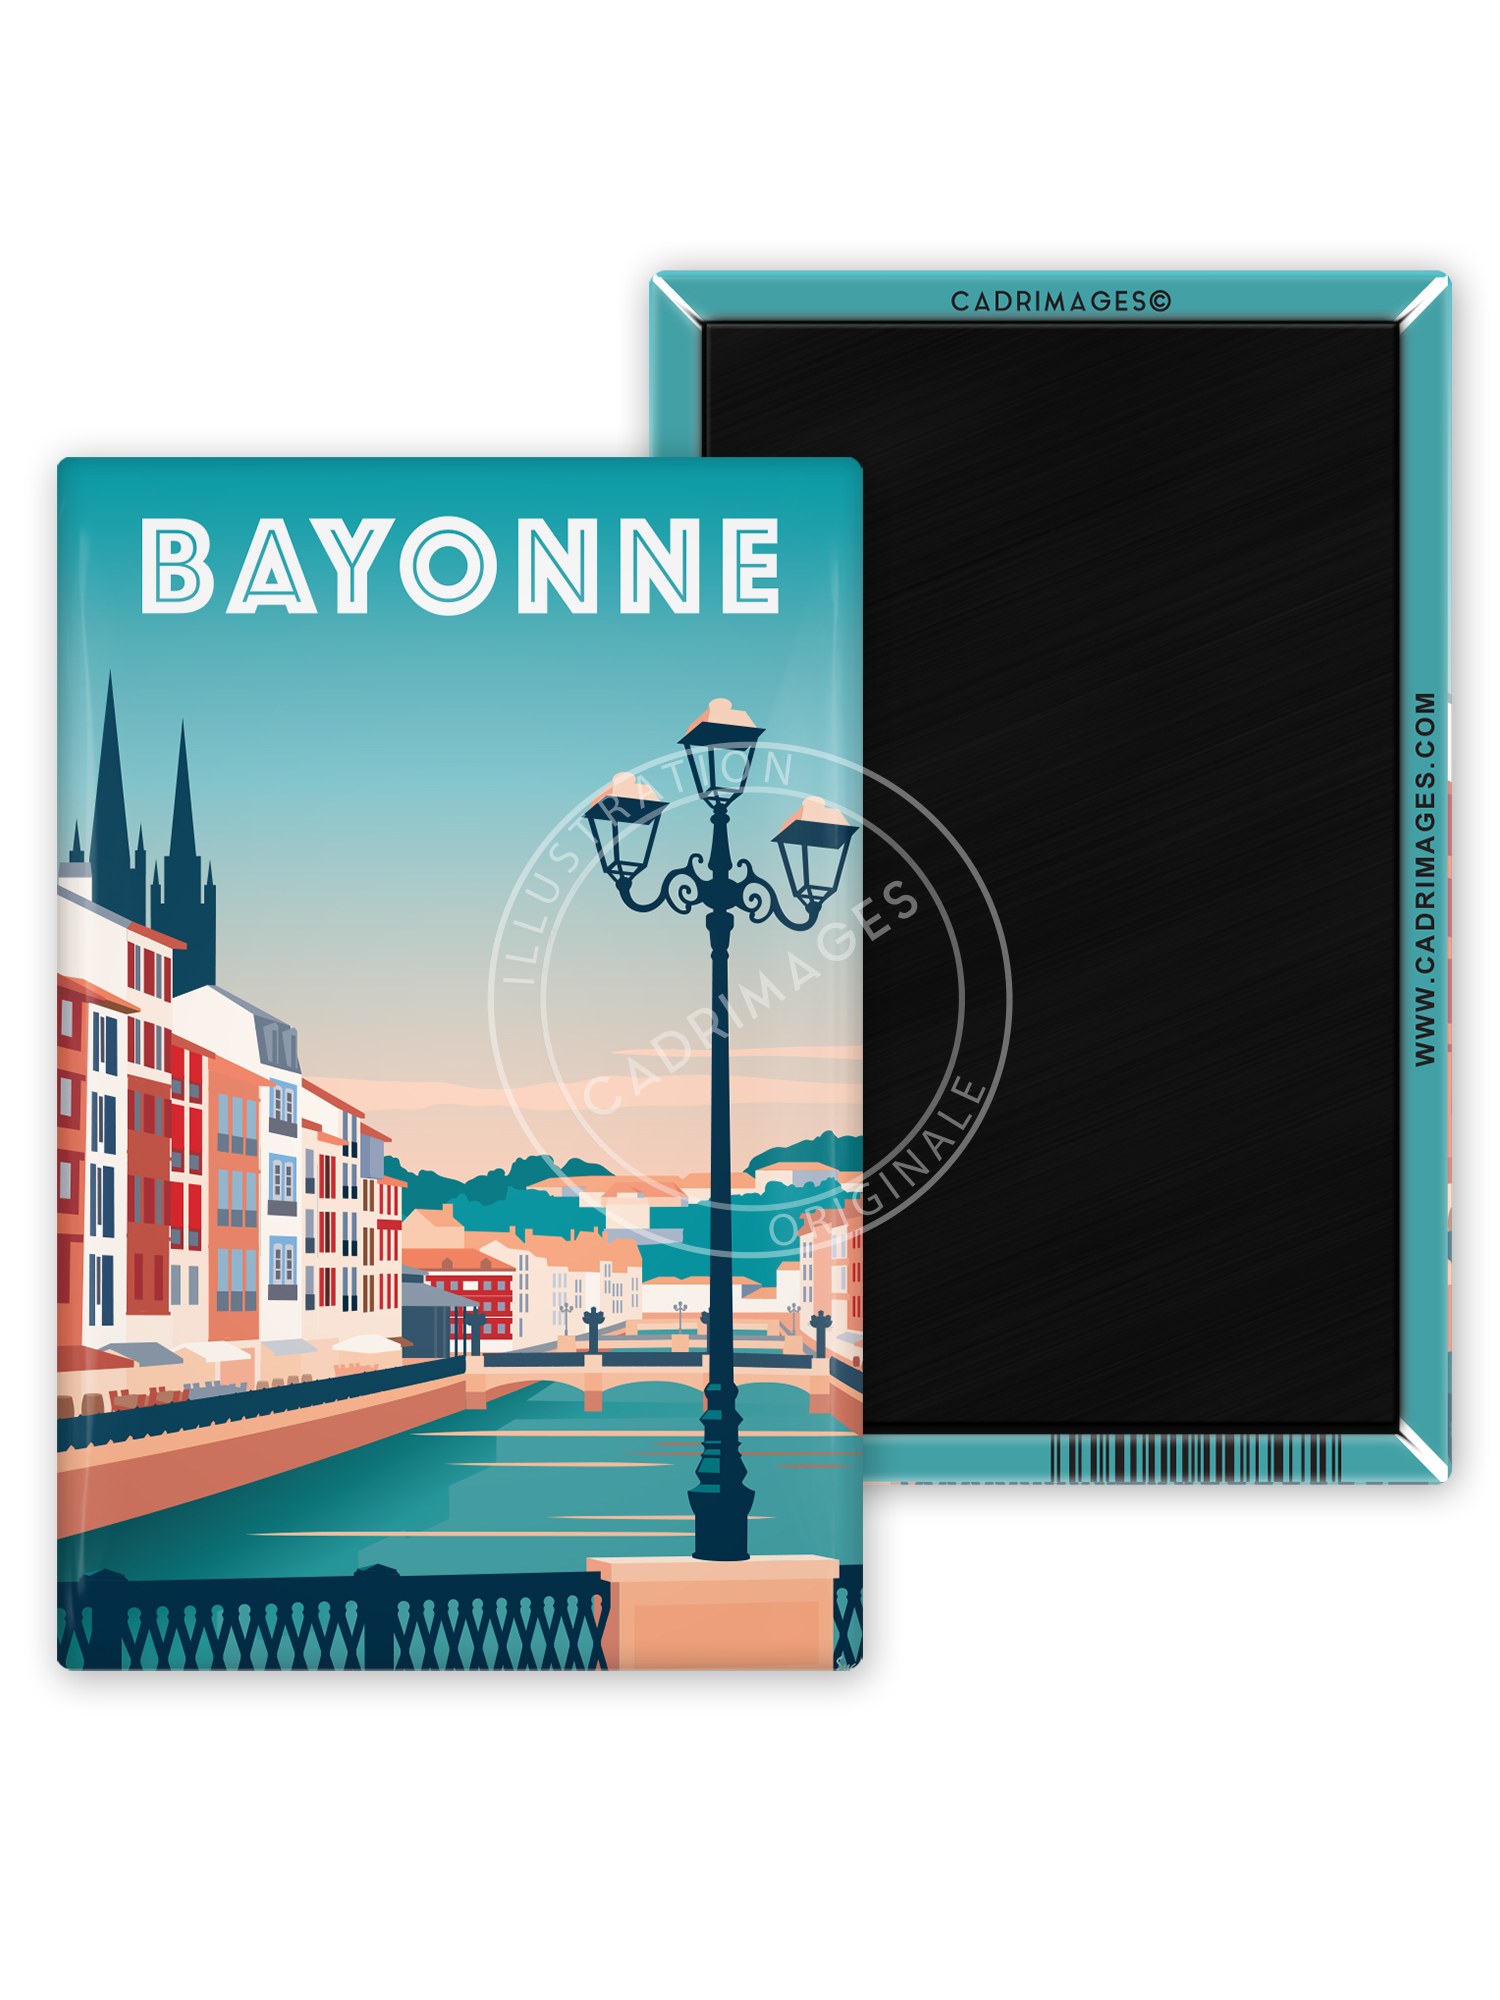 Magnet de Bayonne, la nive